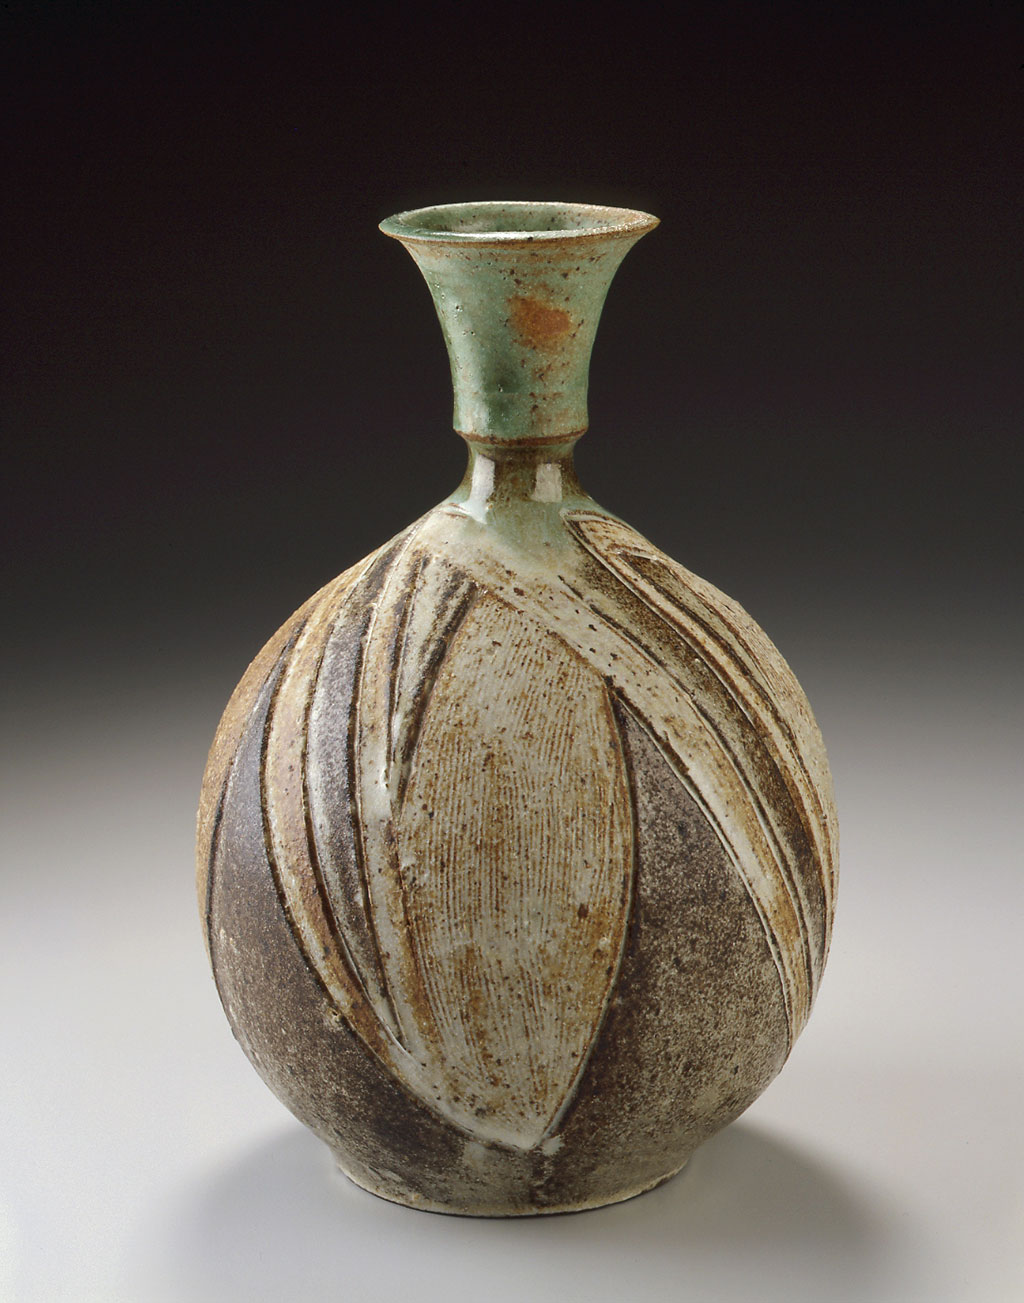 Marguerite Wildenhain, Untitled vase, c.1972. Courtesy Forrest L. Merrill, M. Lee Fatheree photograph